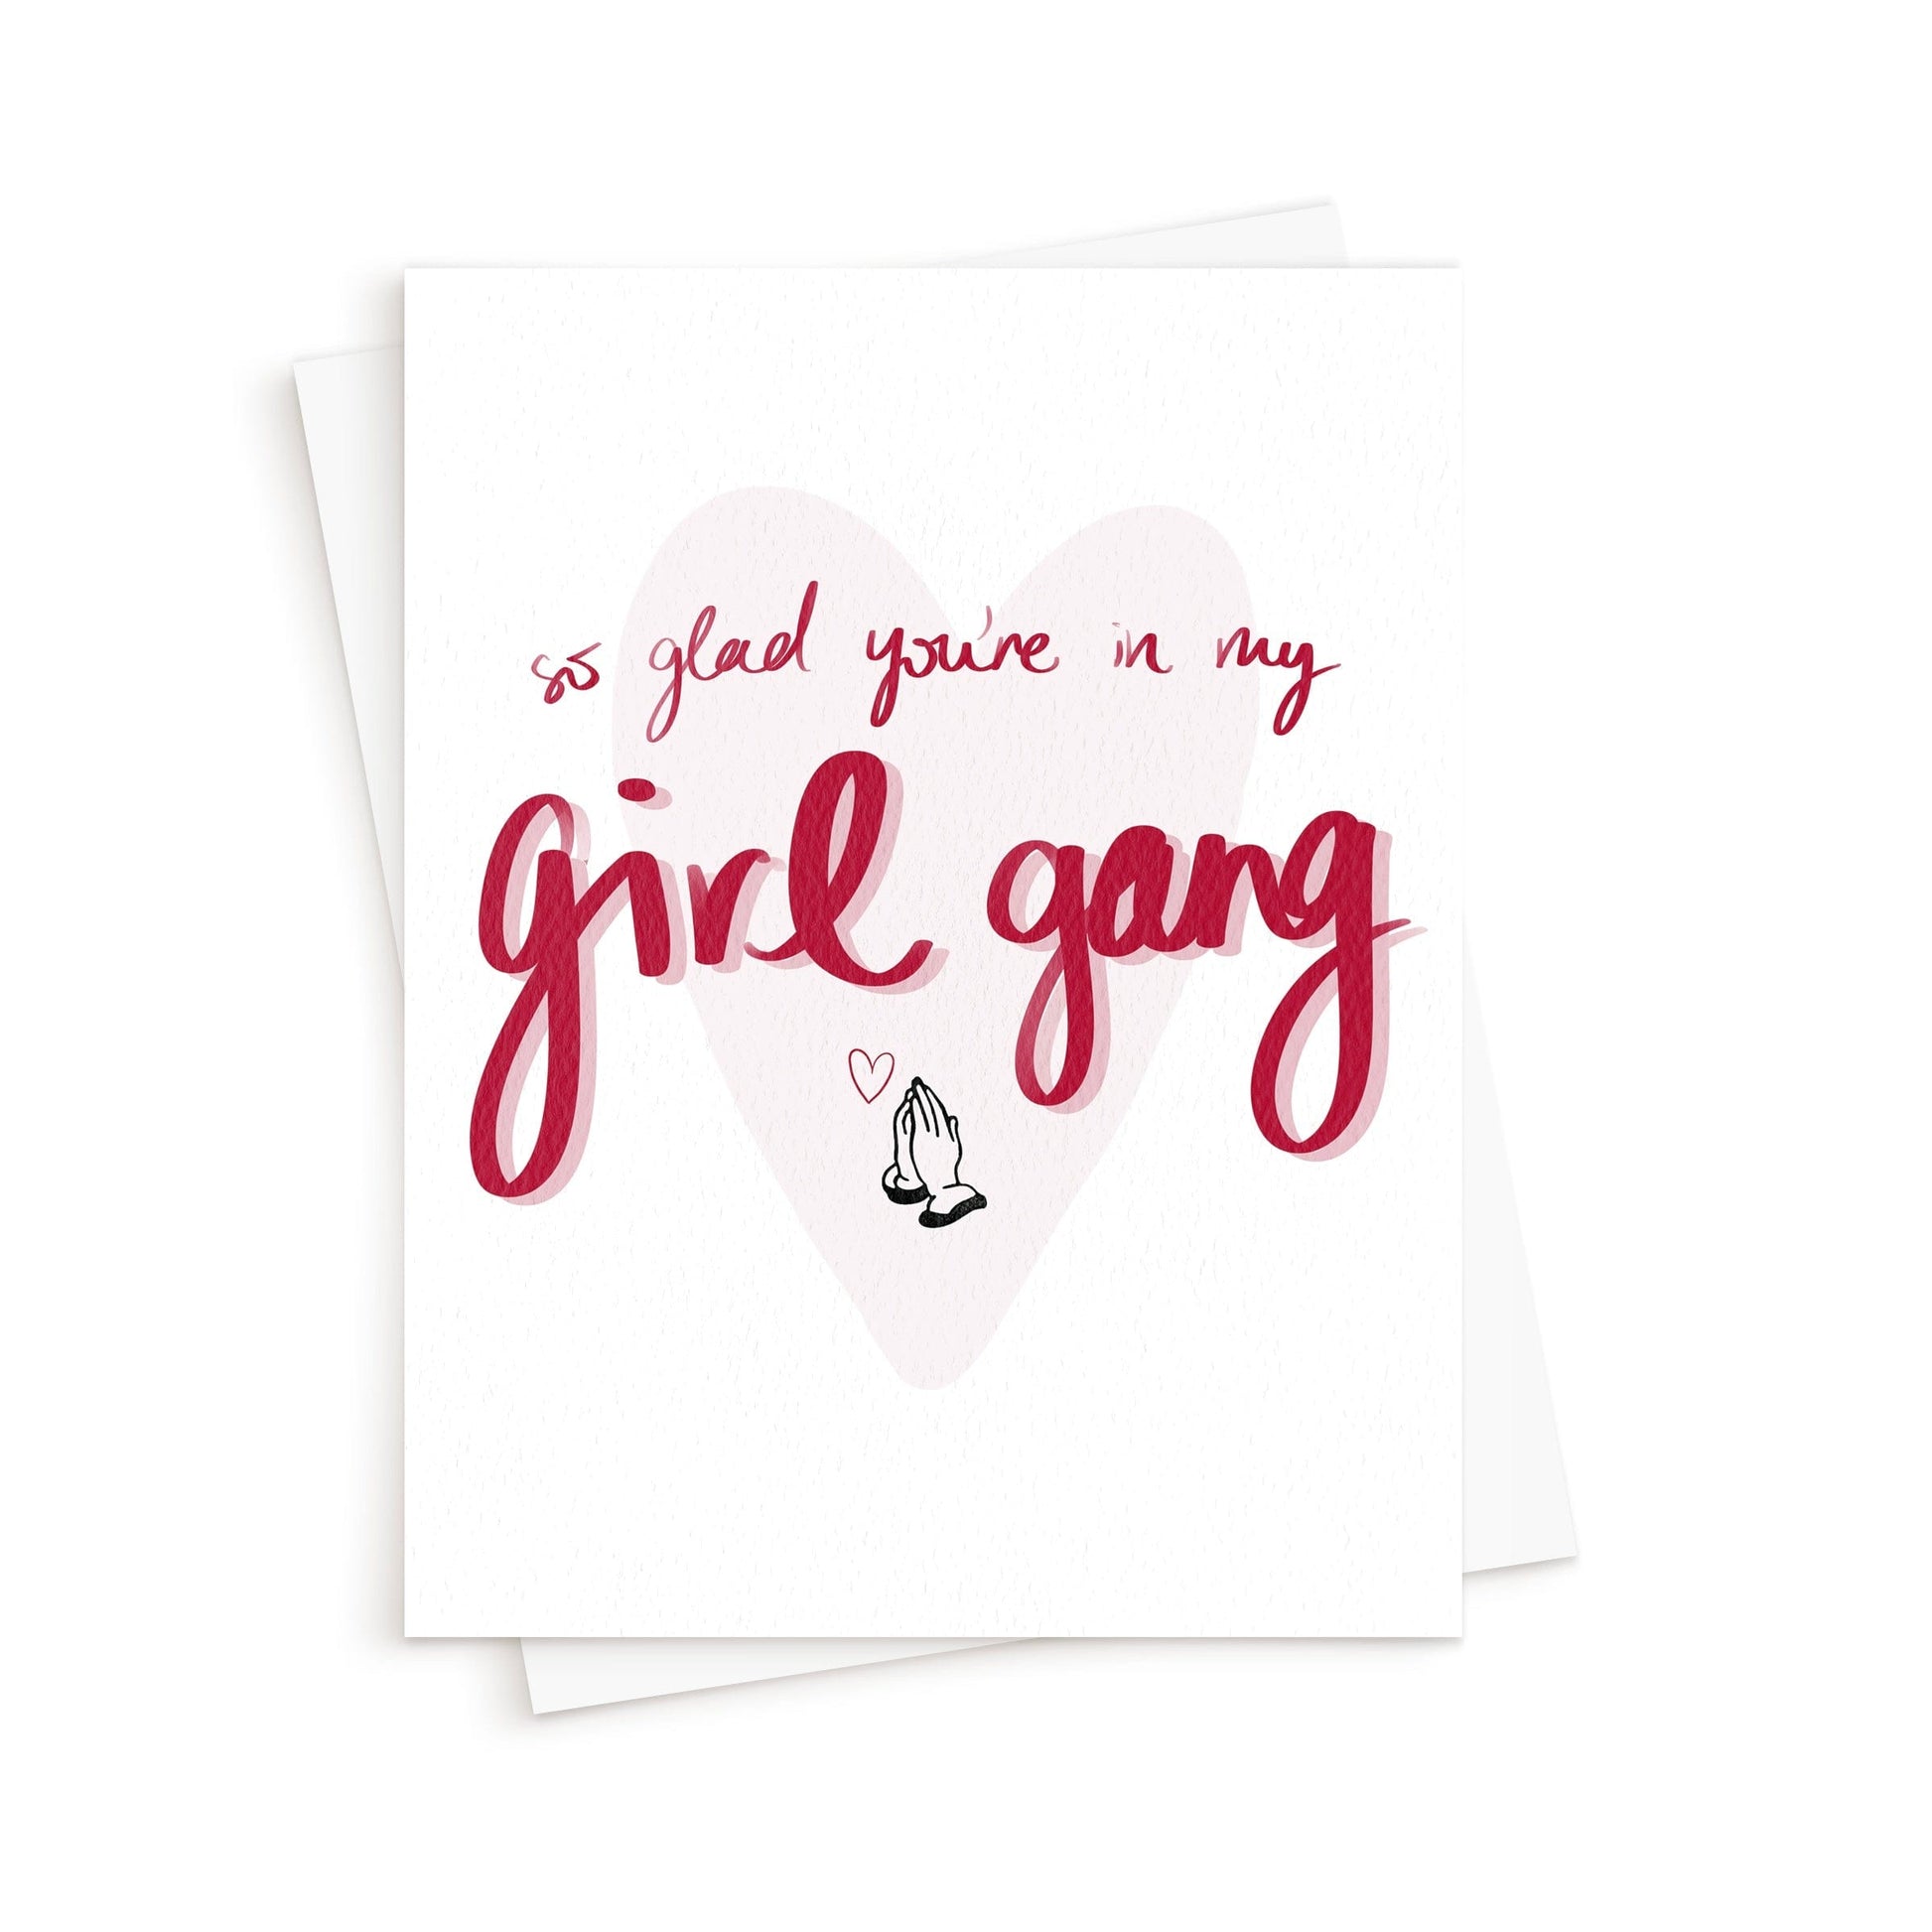 The Girl Gang Card. Fun and custom greeting cards.